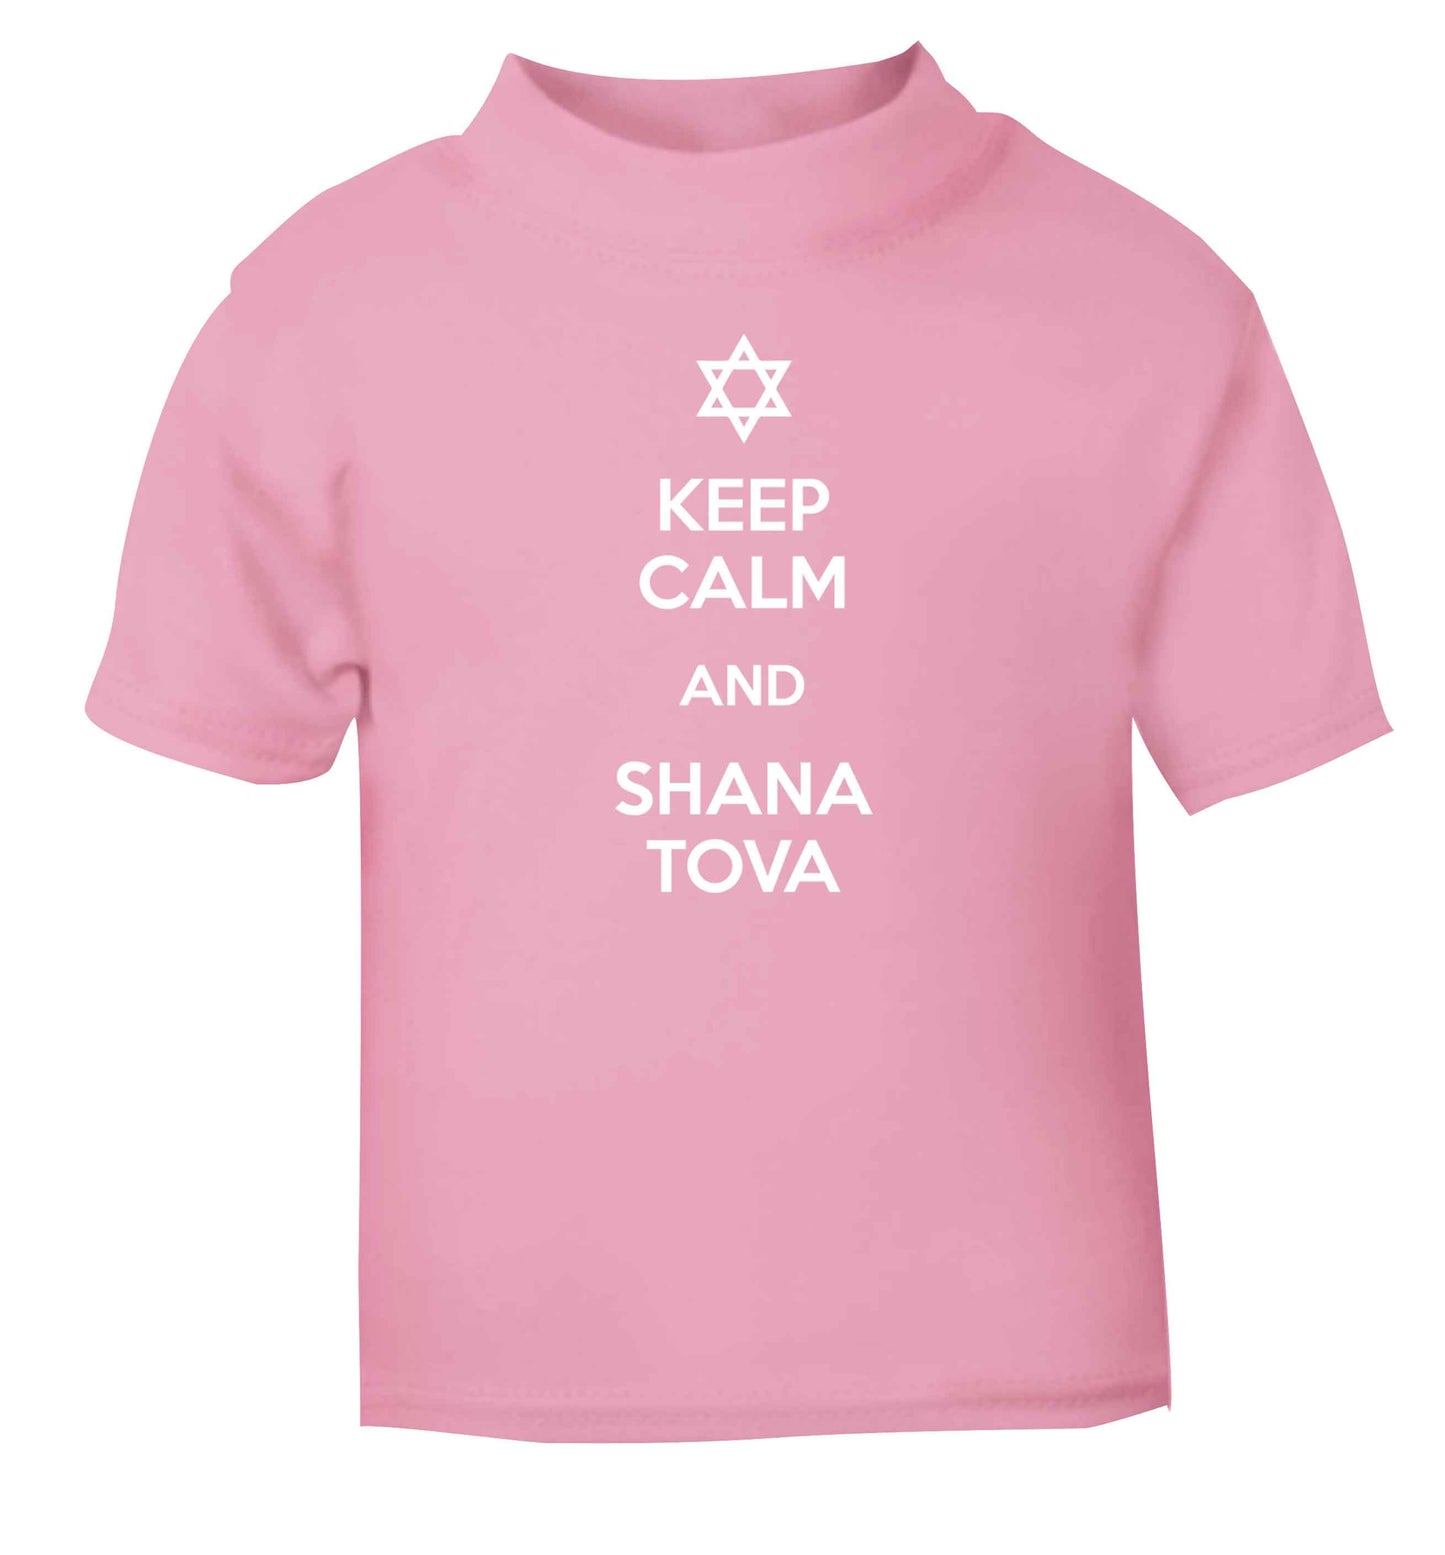 Keep calm and shana tova light pink Baby Toddler Tshirt 2 Years